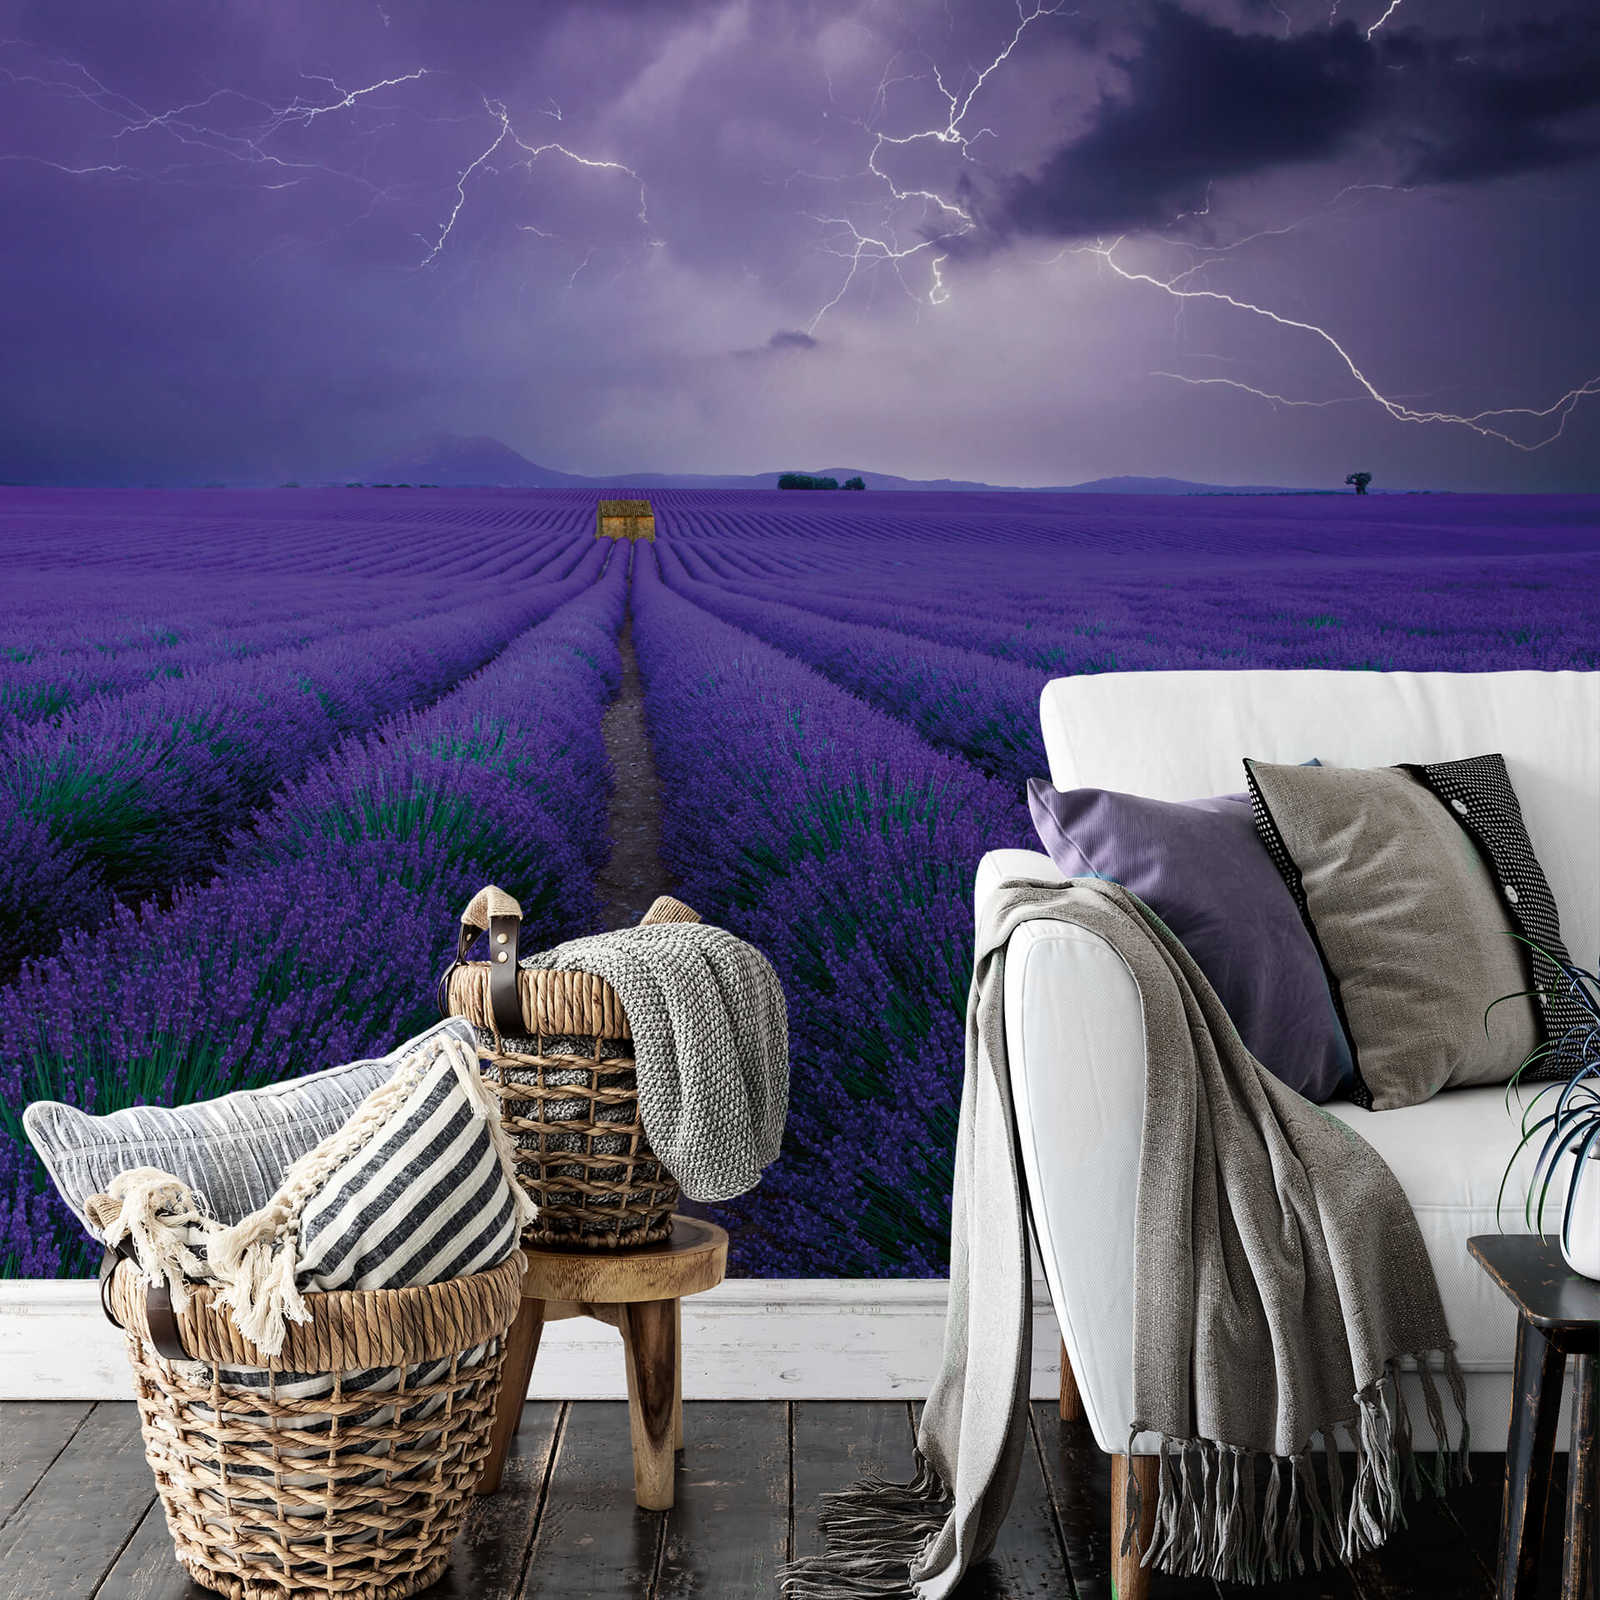             Photo wallpaper lavender field - purple, green, brown
        